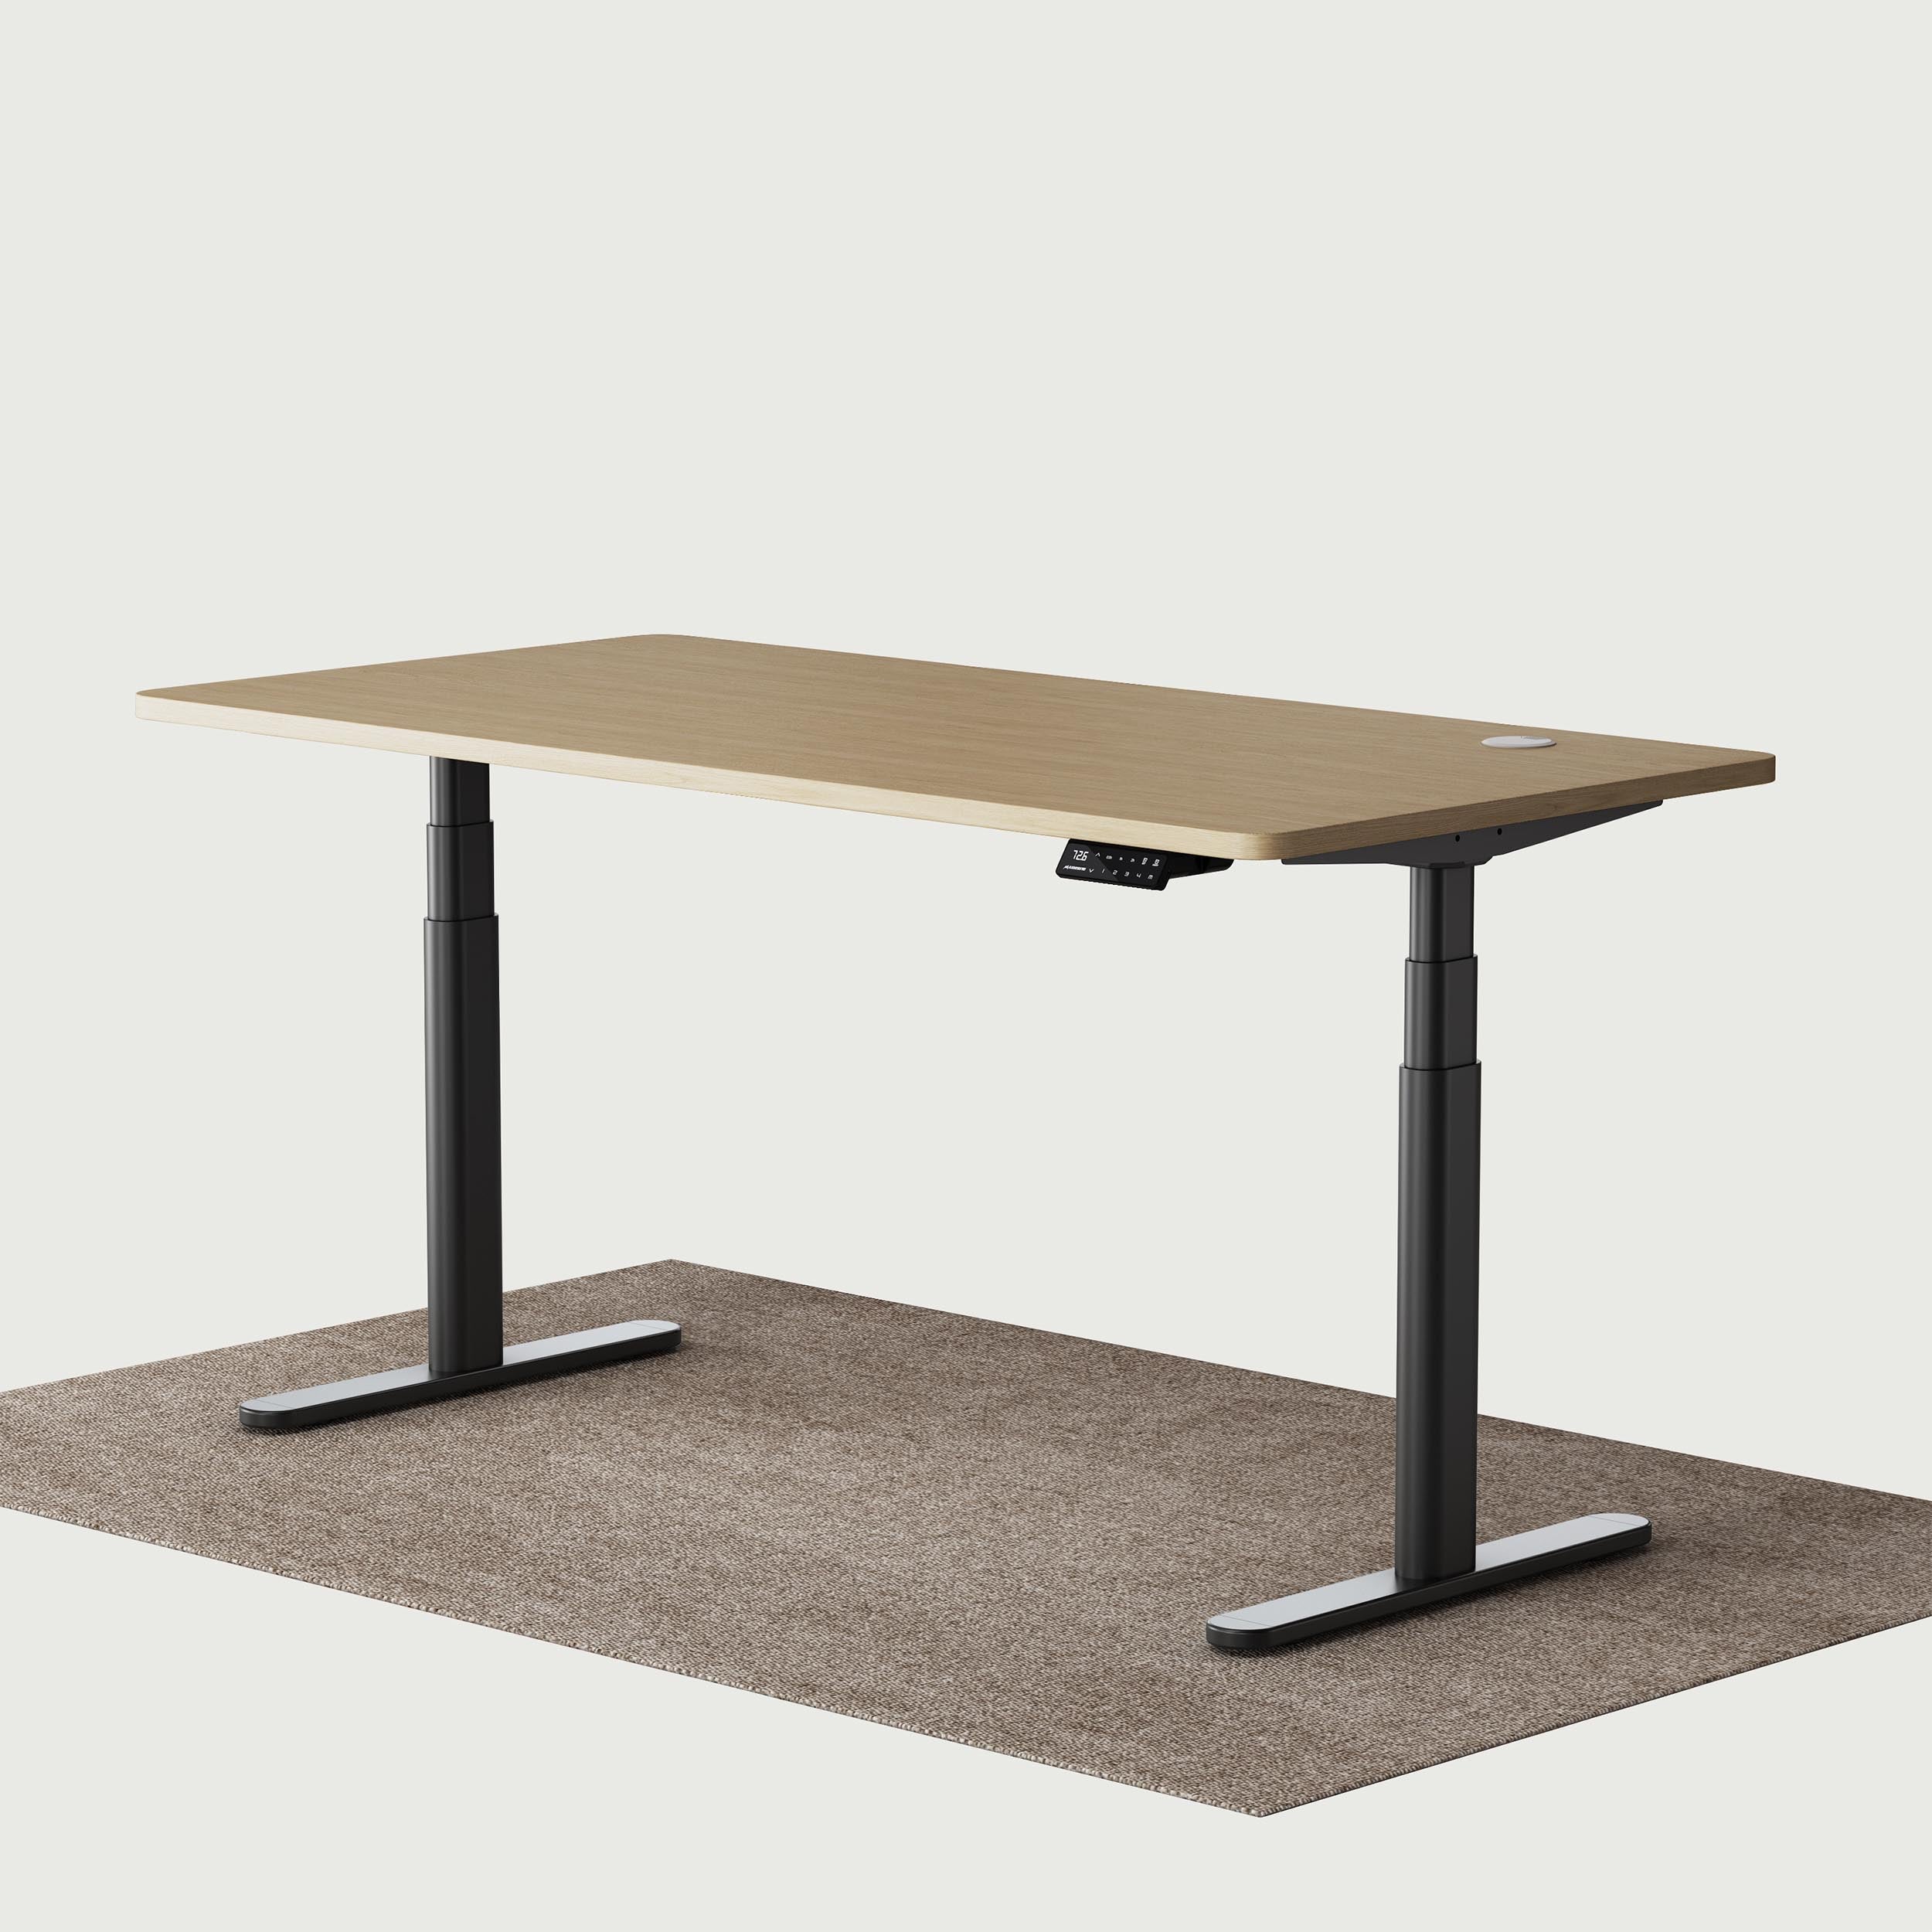 TH2 Pro Plus black oval electric standing desk frame with oak 160x80 cm desktop